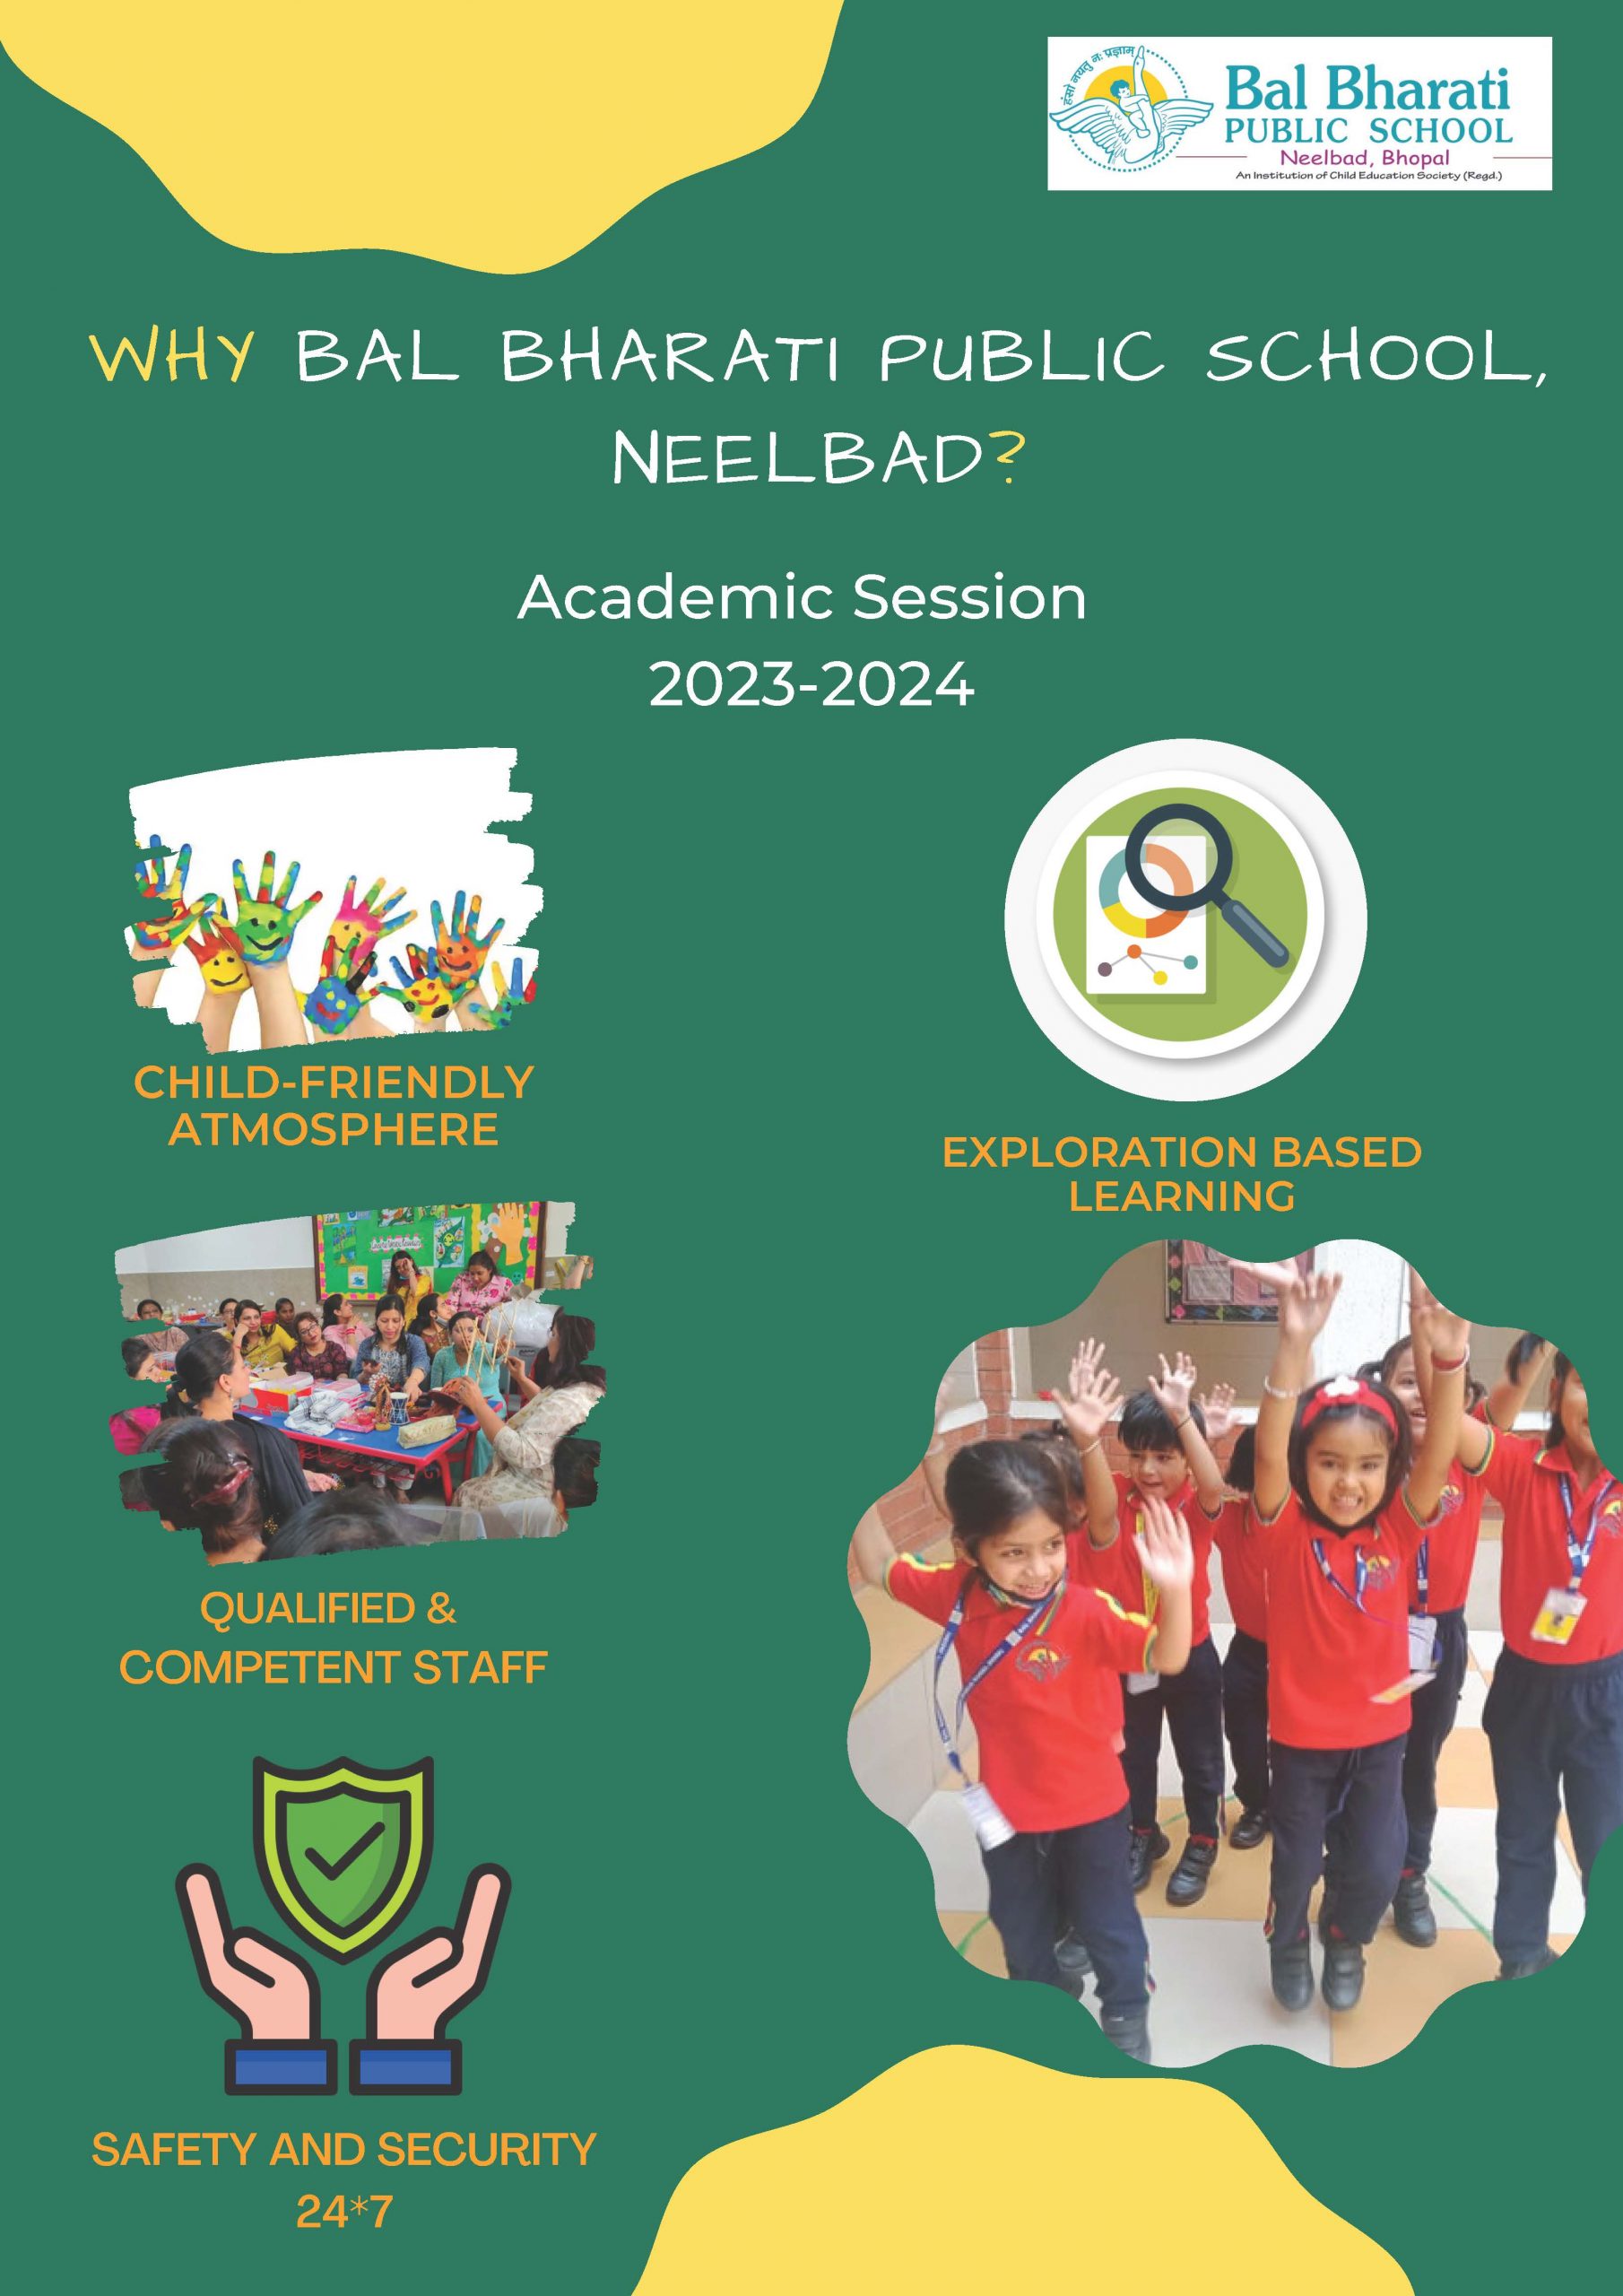 BAL BHARATI PUBLIC SCHOOL, NEELBAD (1)_Page_1